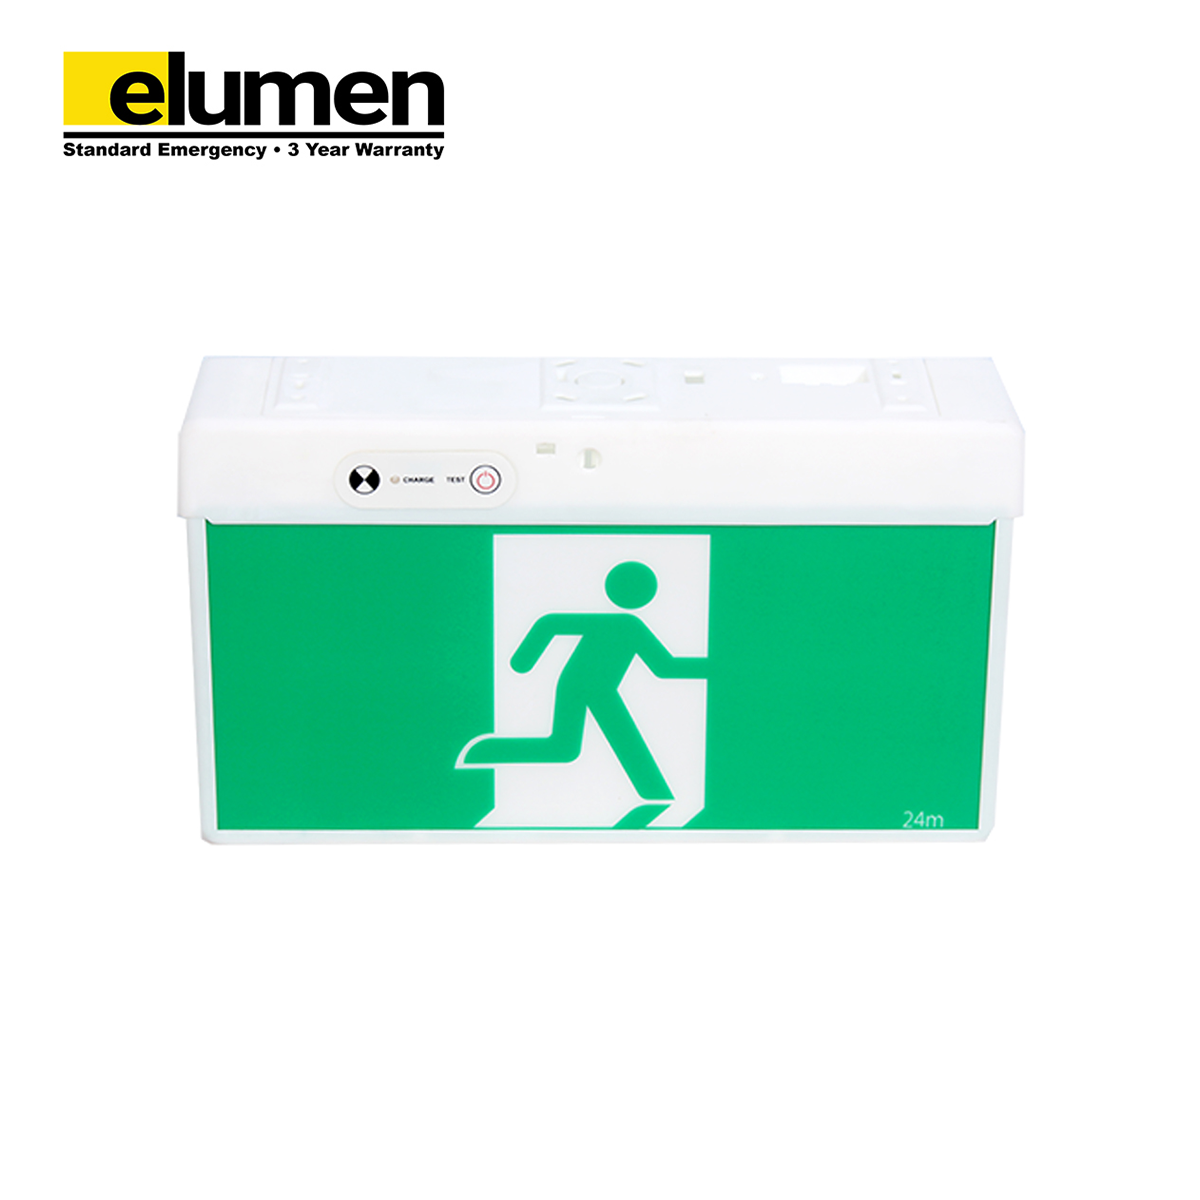 LED Universal Exit Light -Emergency - Premium Exit & Emergency Lighting from elumen - Shop now at Firebox Australia